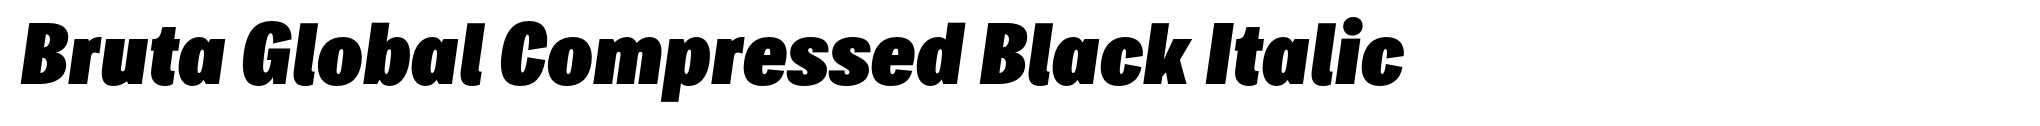 Bruta Global Compressed Black Italic image